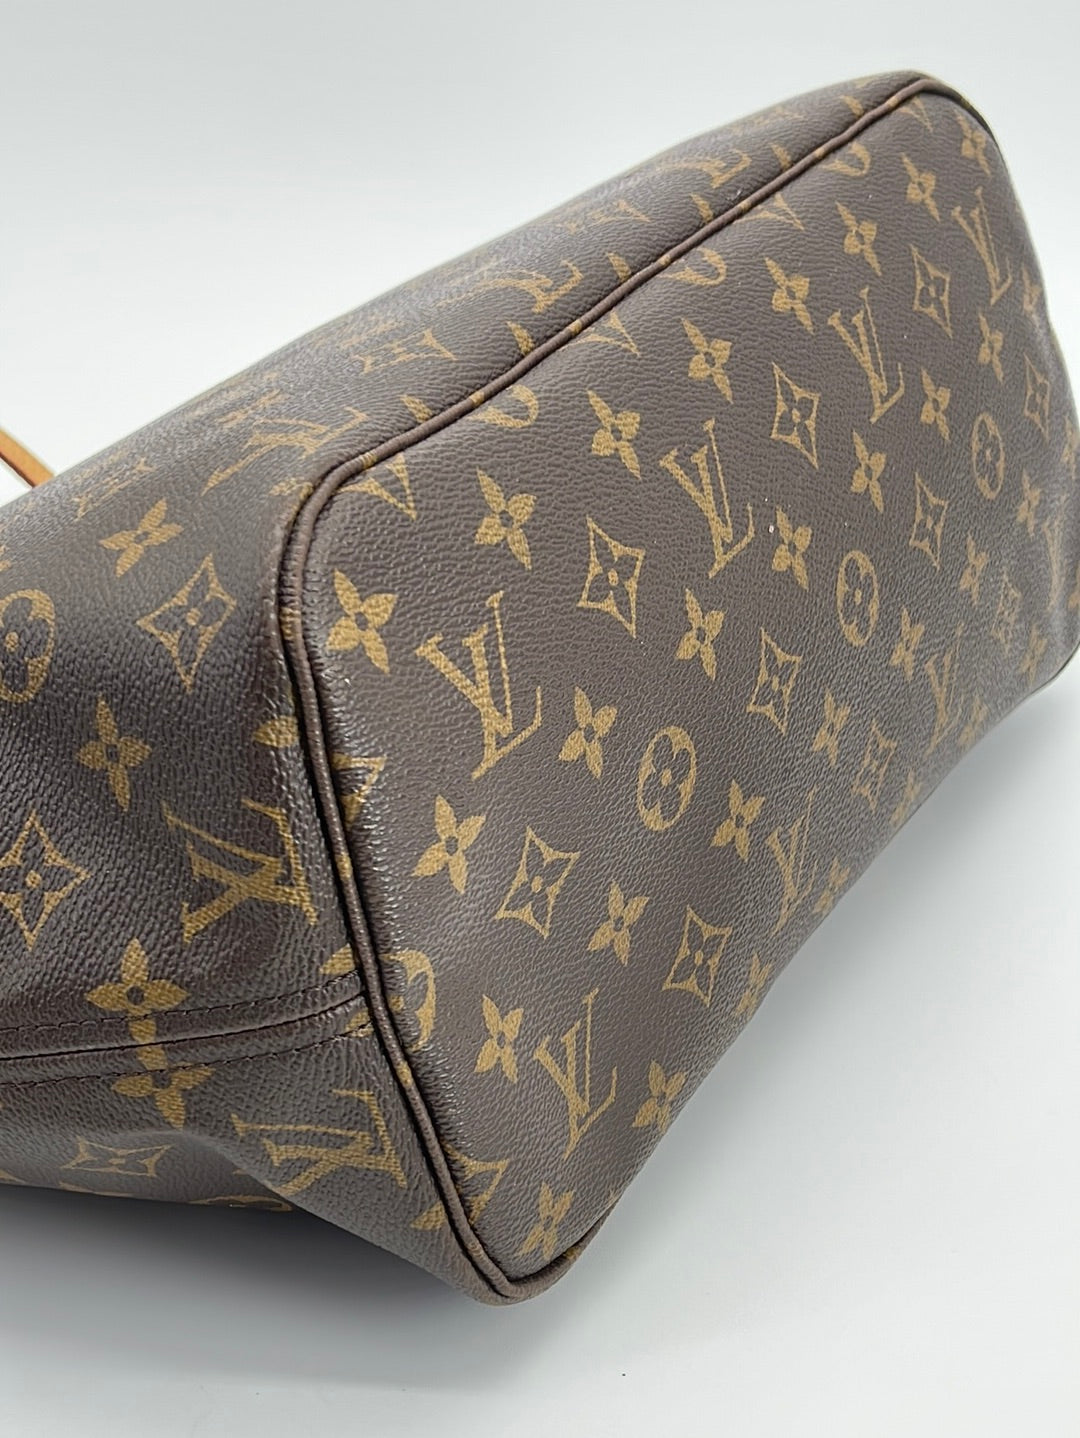 2015 Louis Vuitton Monogram Neverfull MM Shoulder Bag + POUCH $2030+TAX